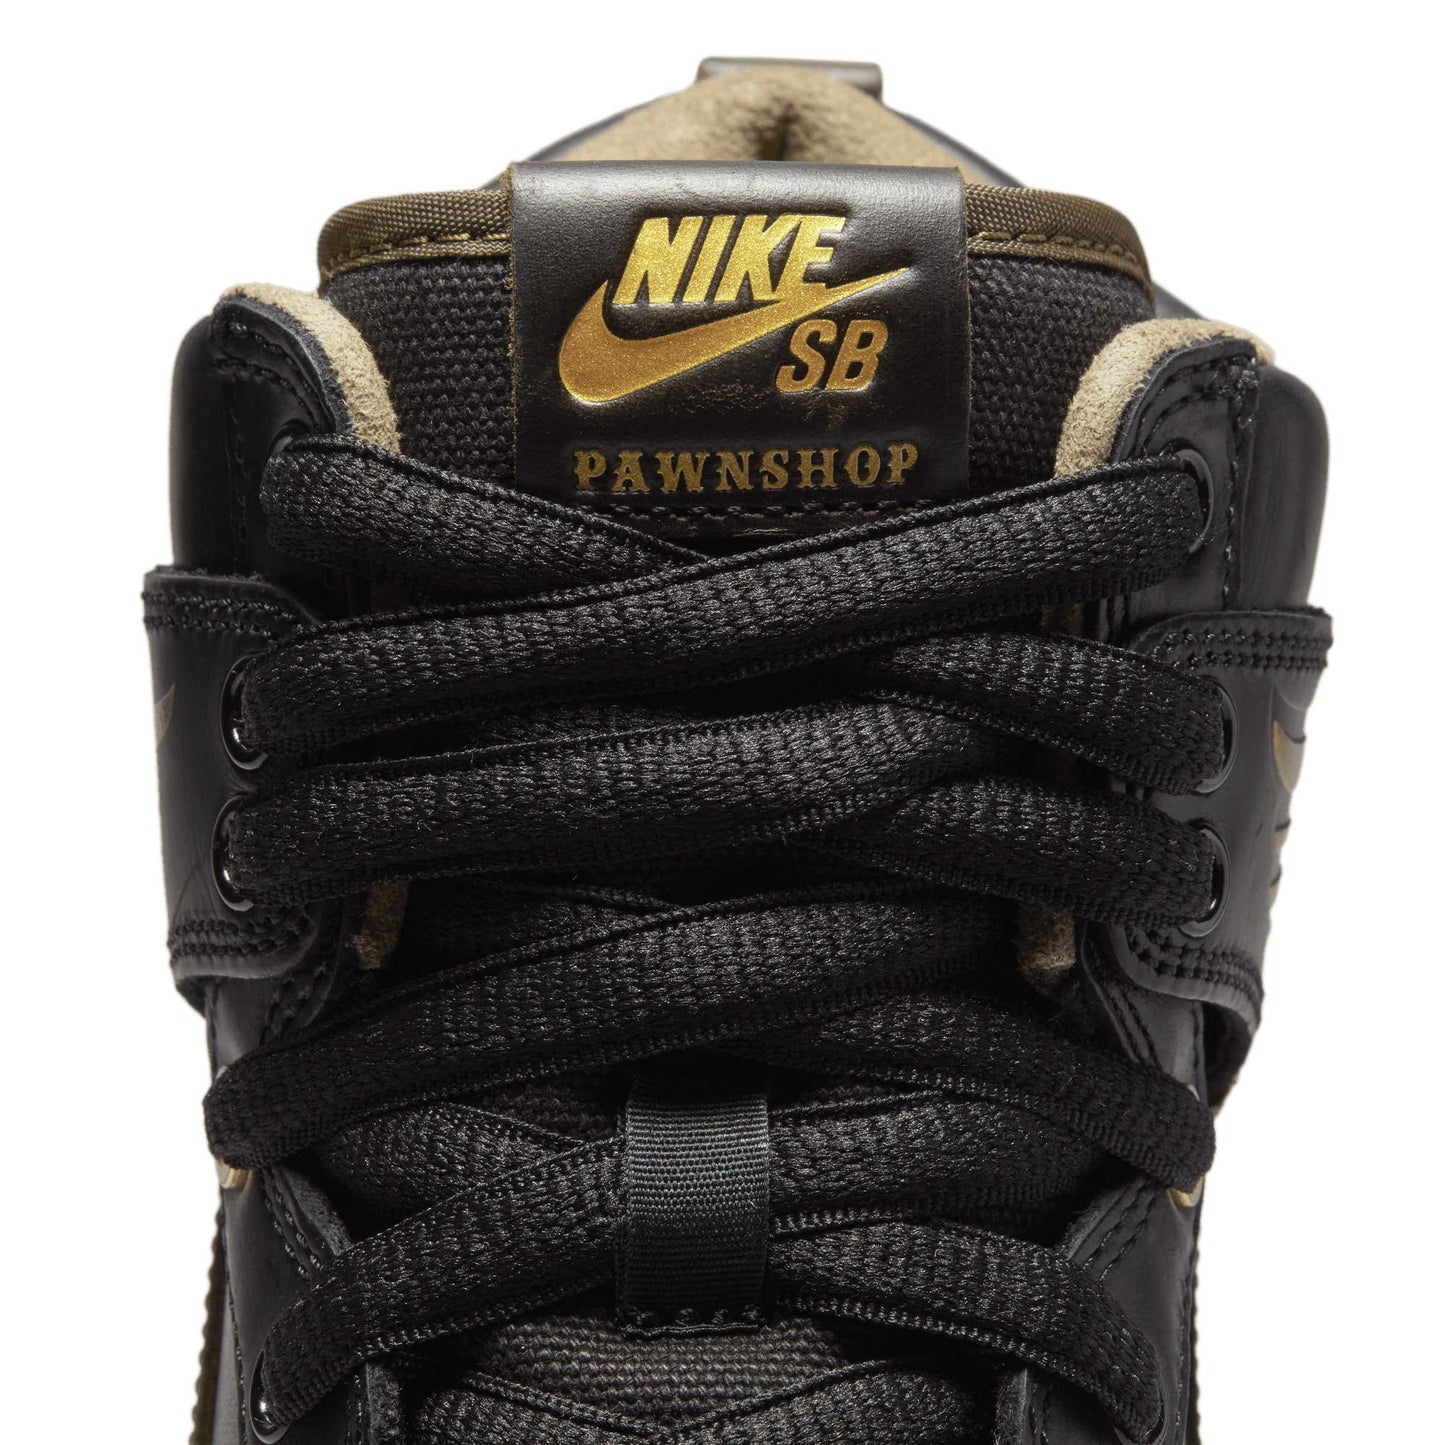 Nike SB Dunk High OG Pawnshop QS, black/black-metallic gold - Tiki Room Skateboards - 12